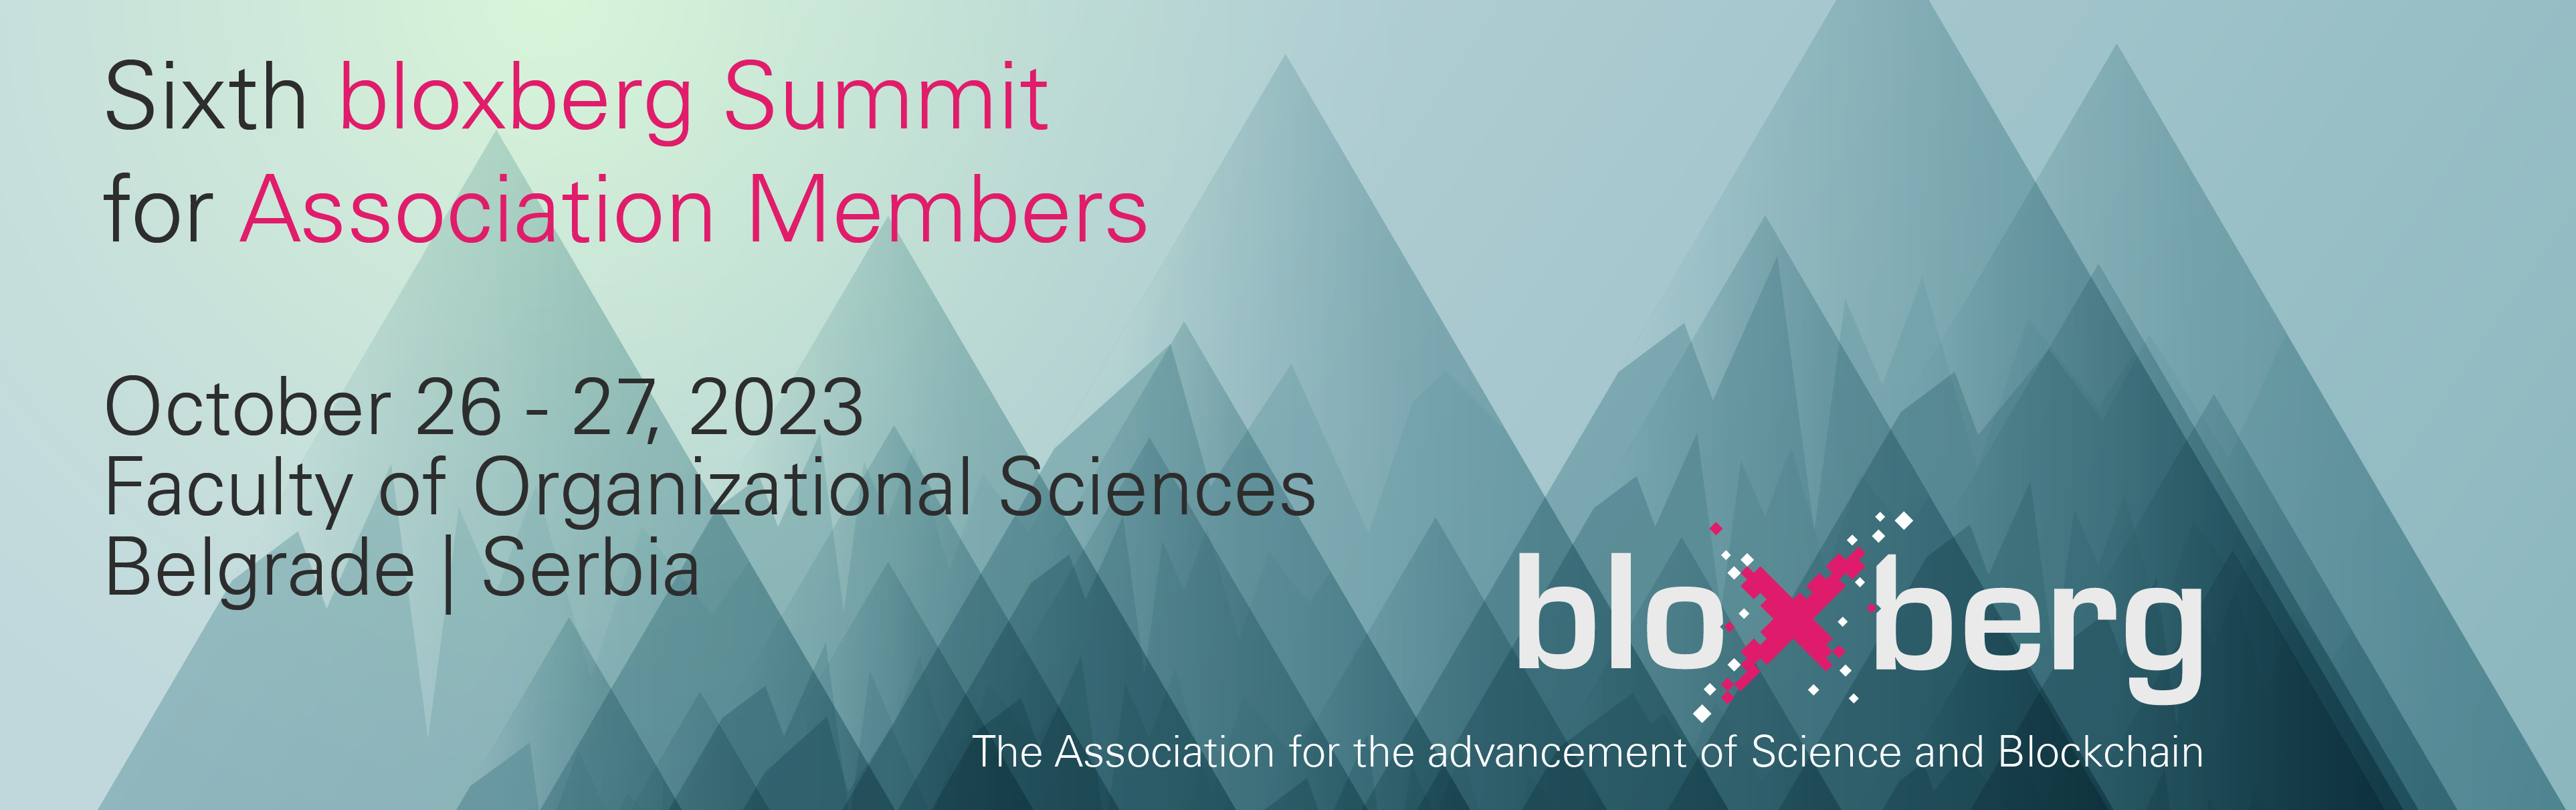 Sixth bloxberg summit for Association Members